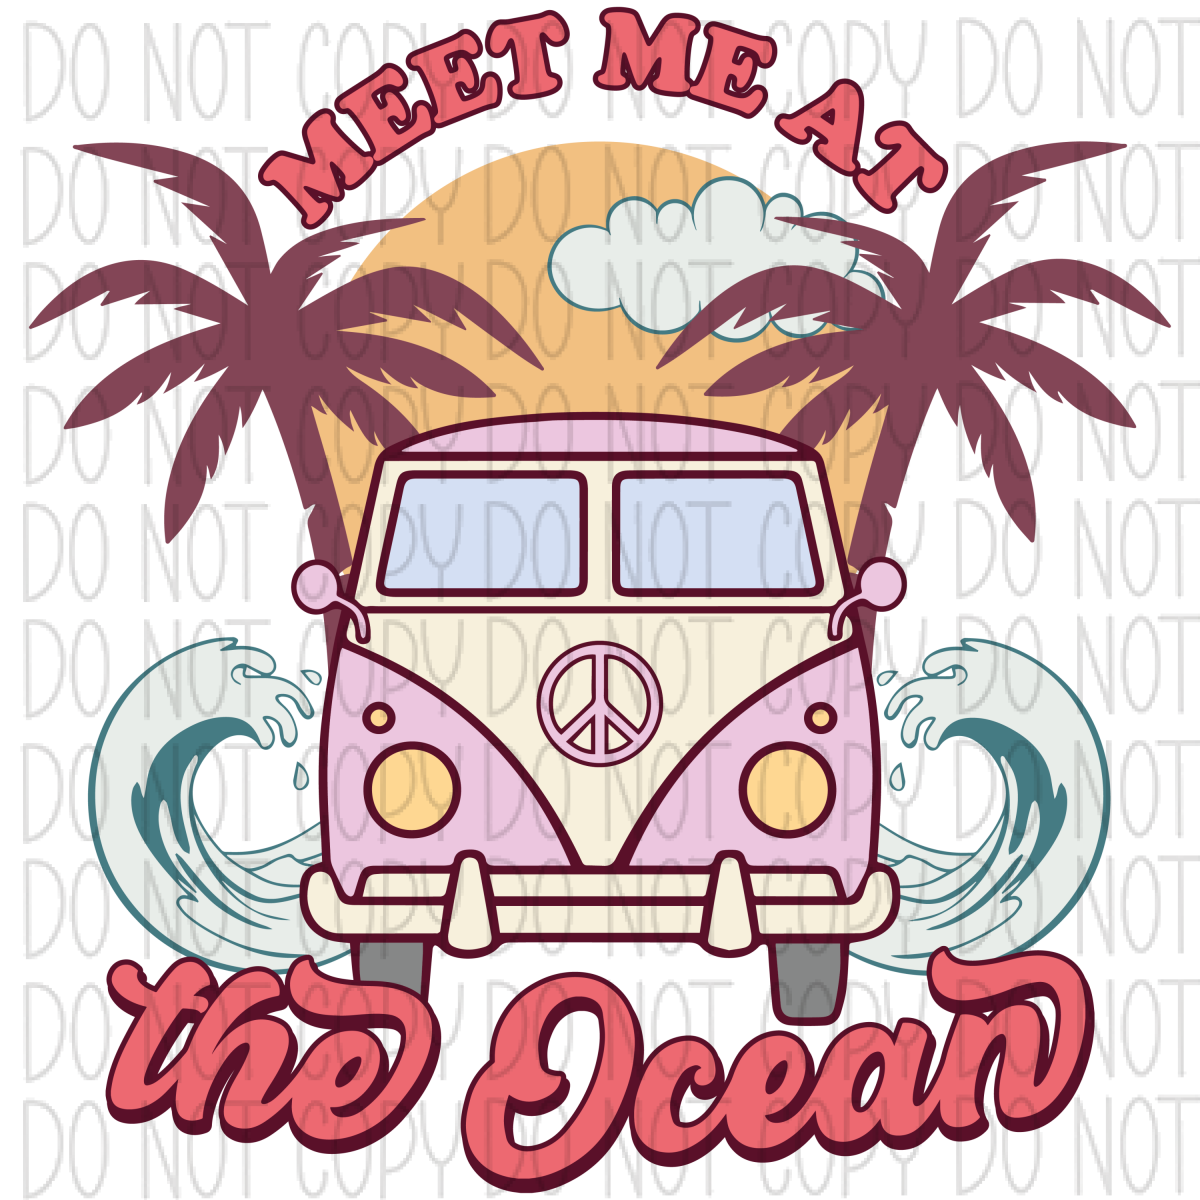 Meet Me At The Ocean